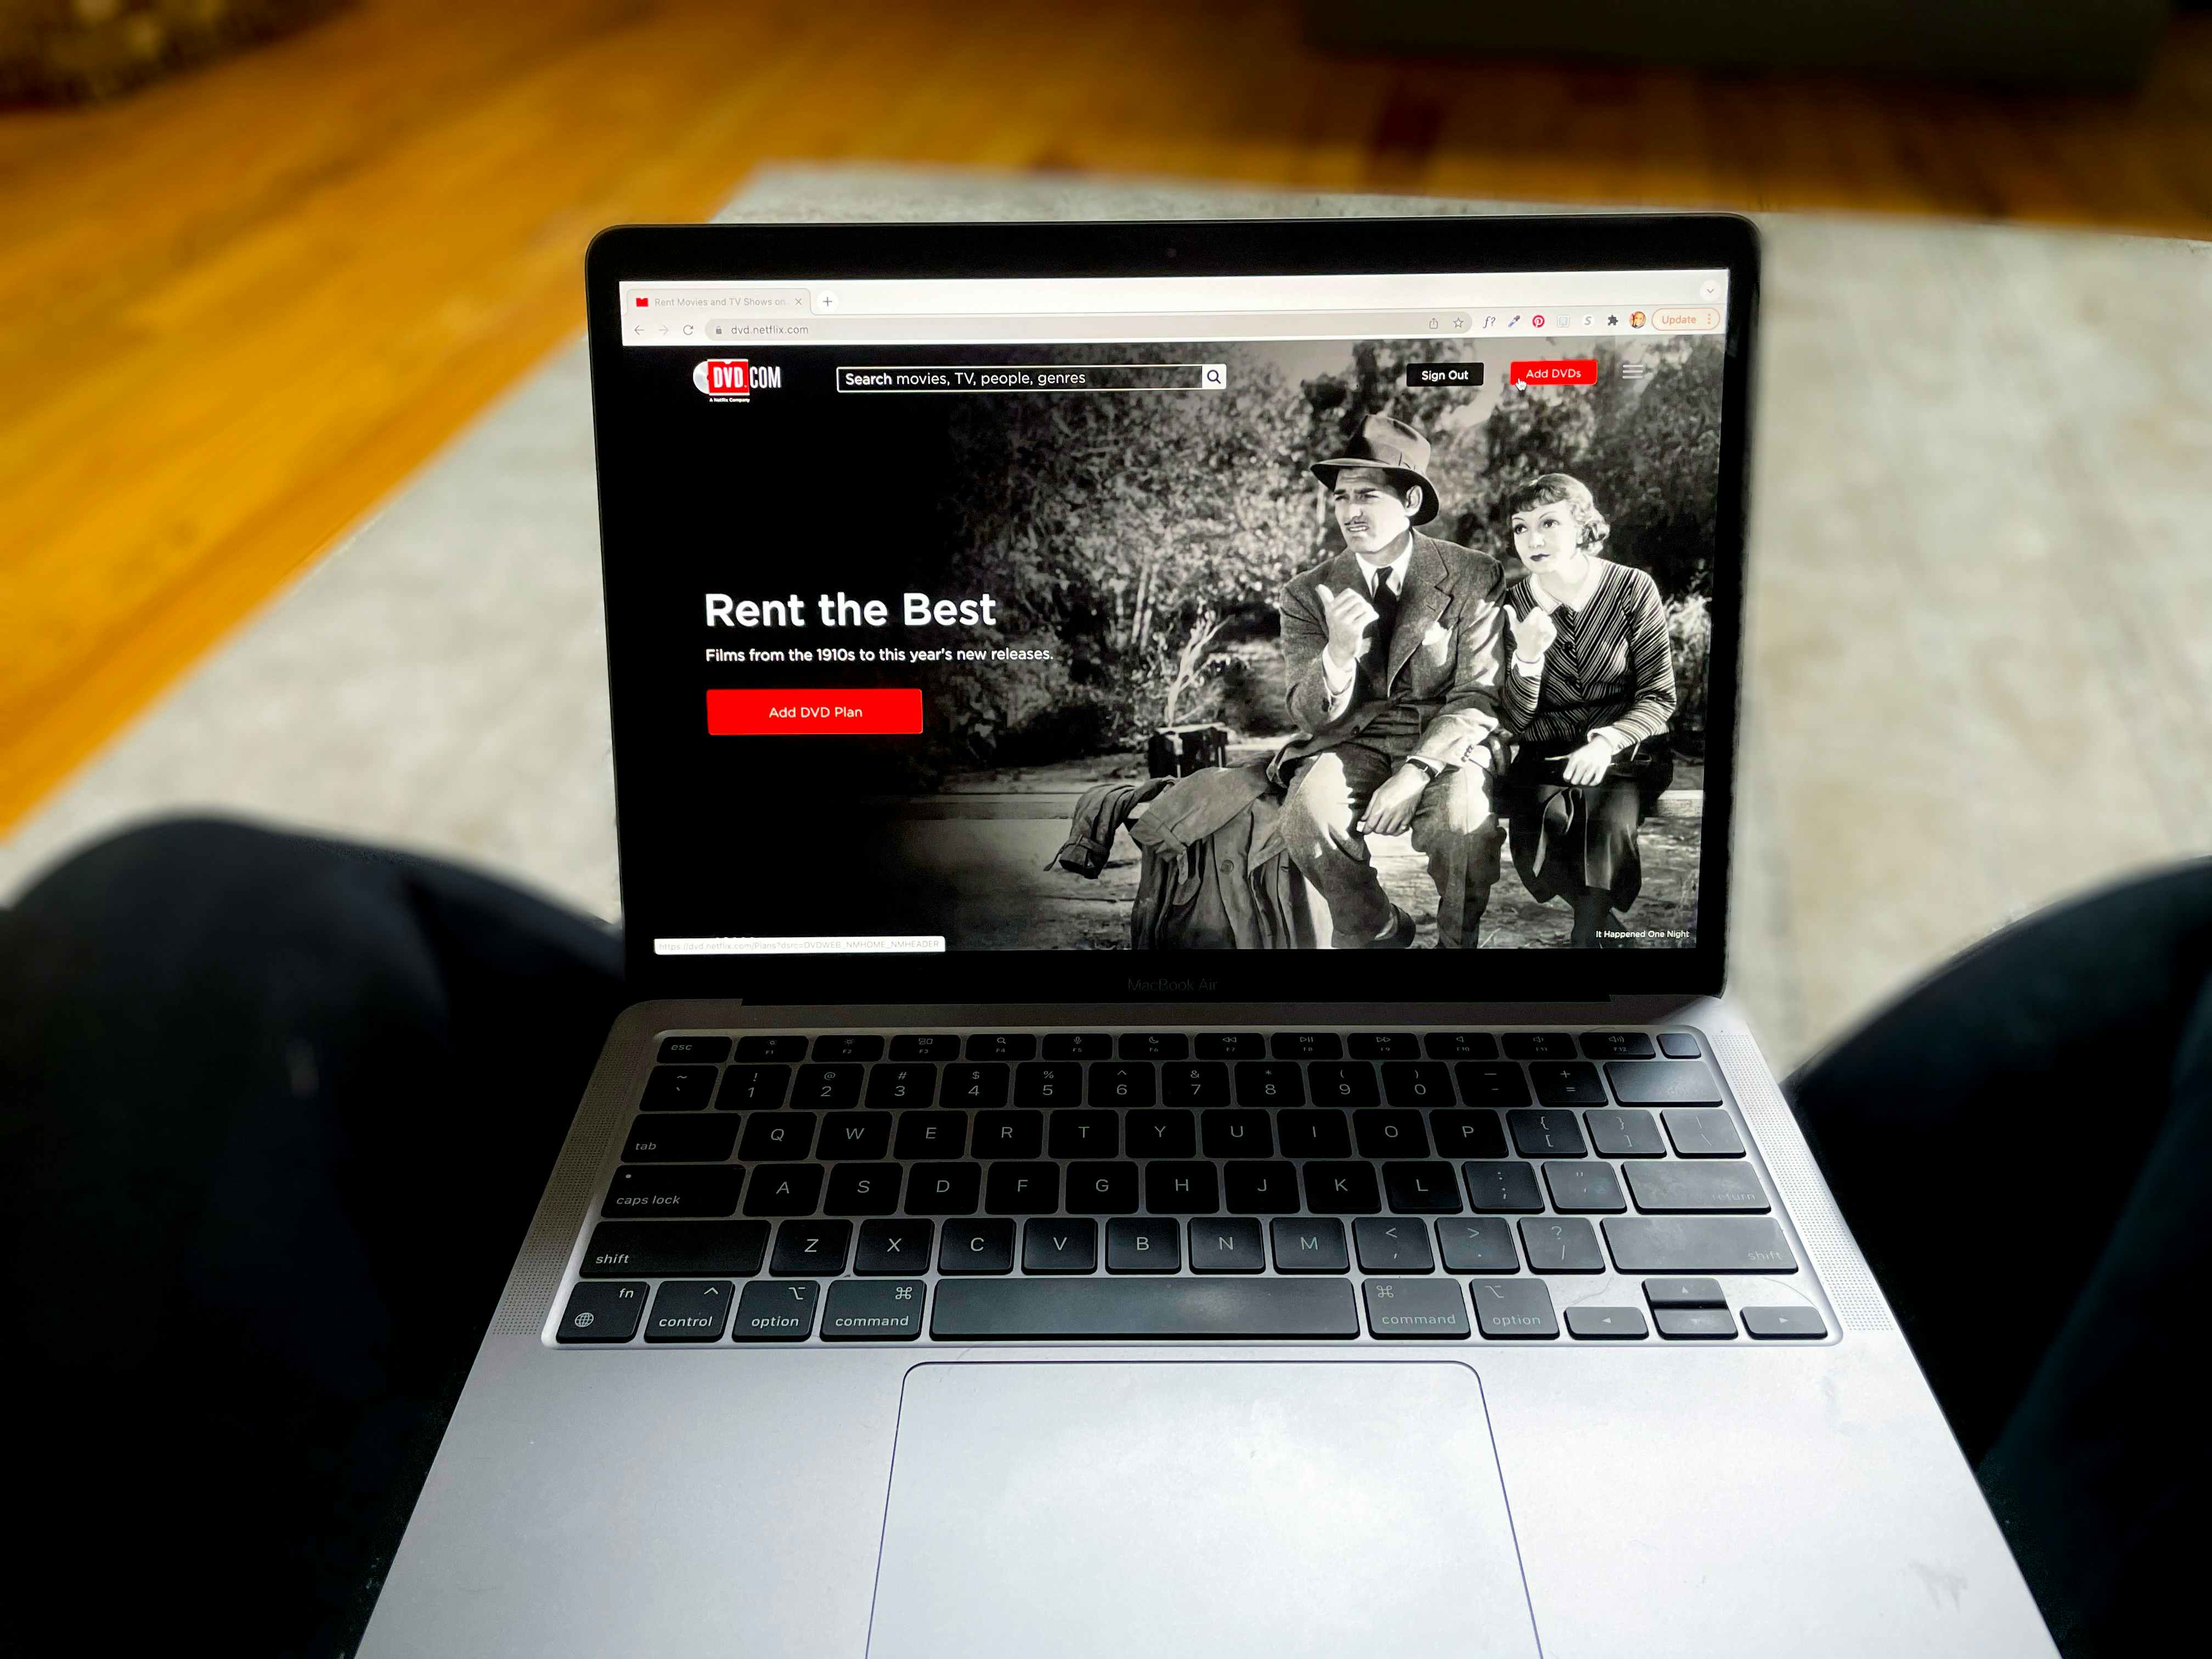 Laptop screen showing Netflix's DVD rental service homepage